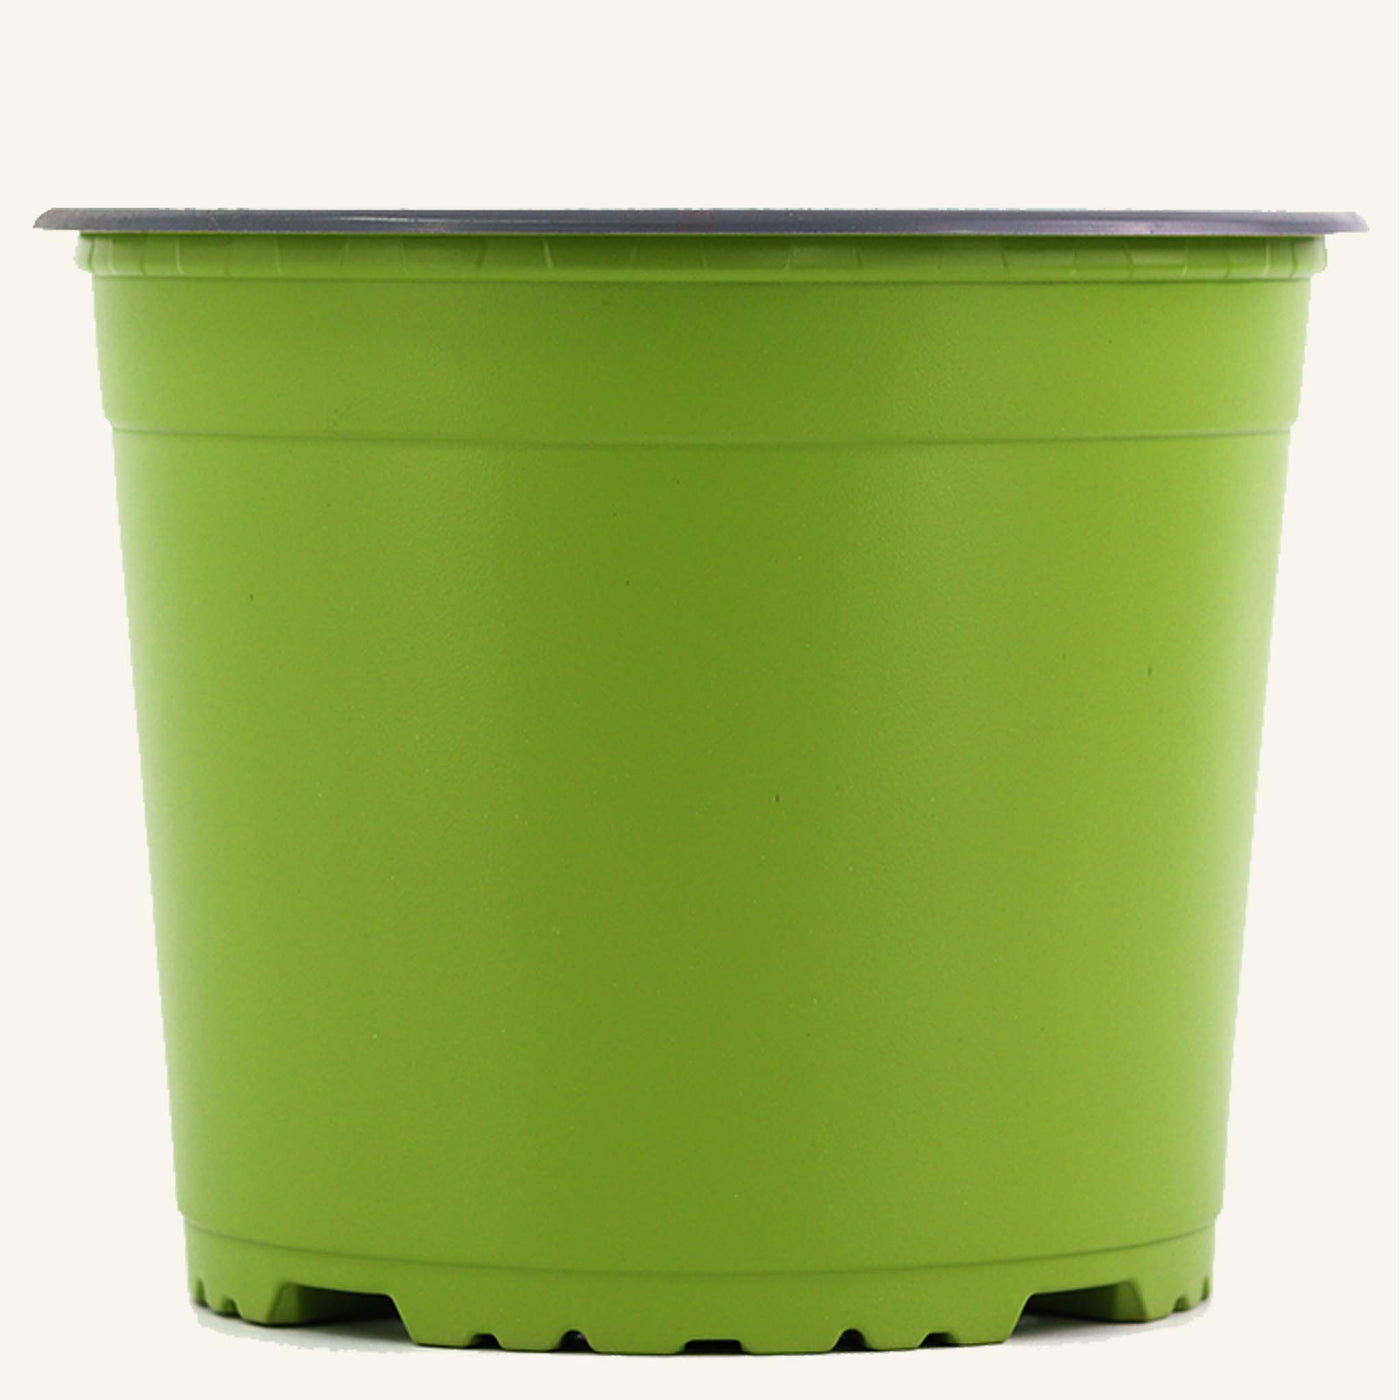 Green nursery pot